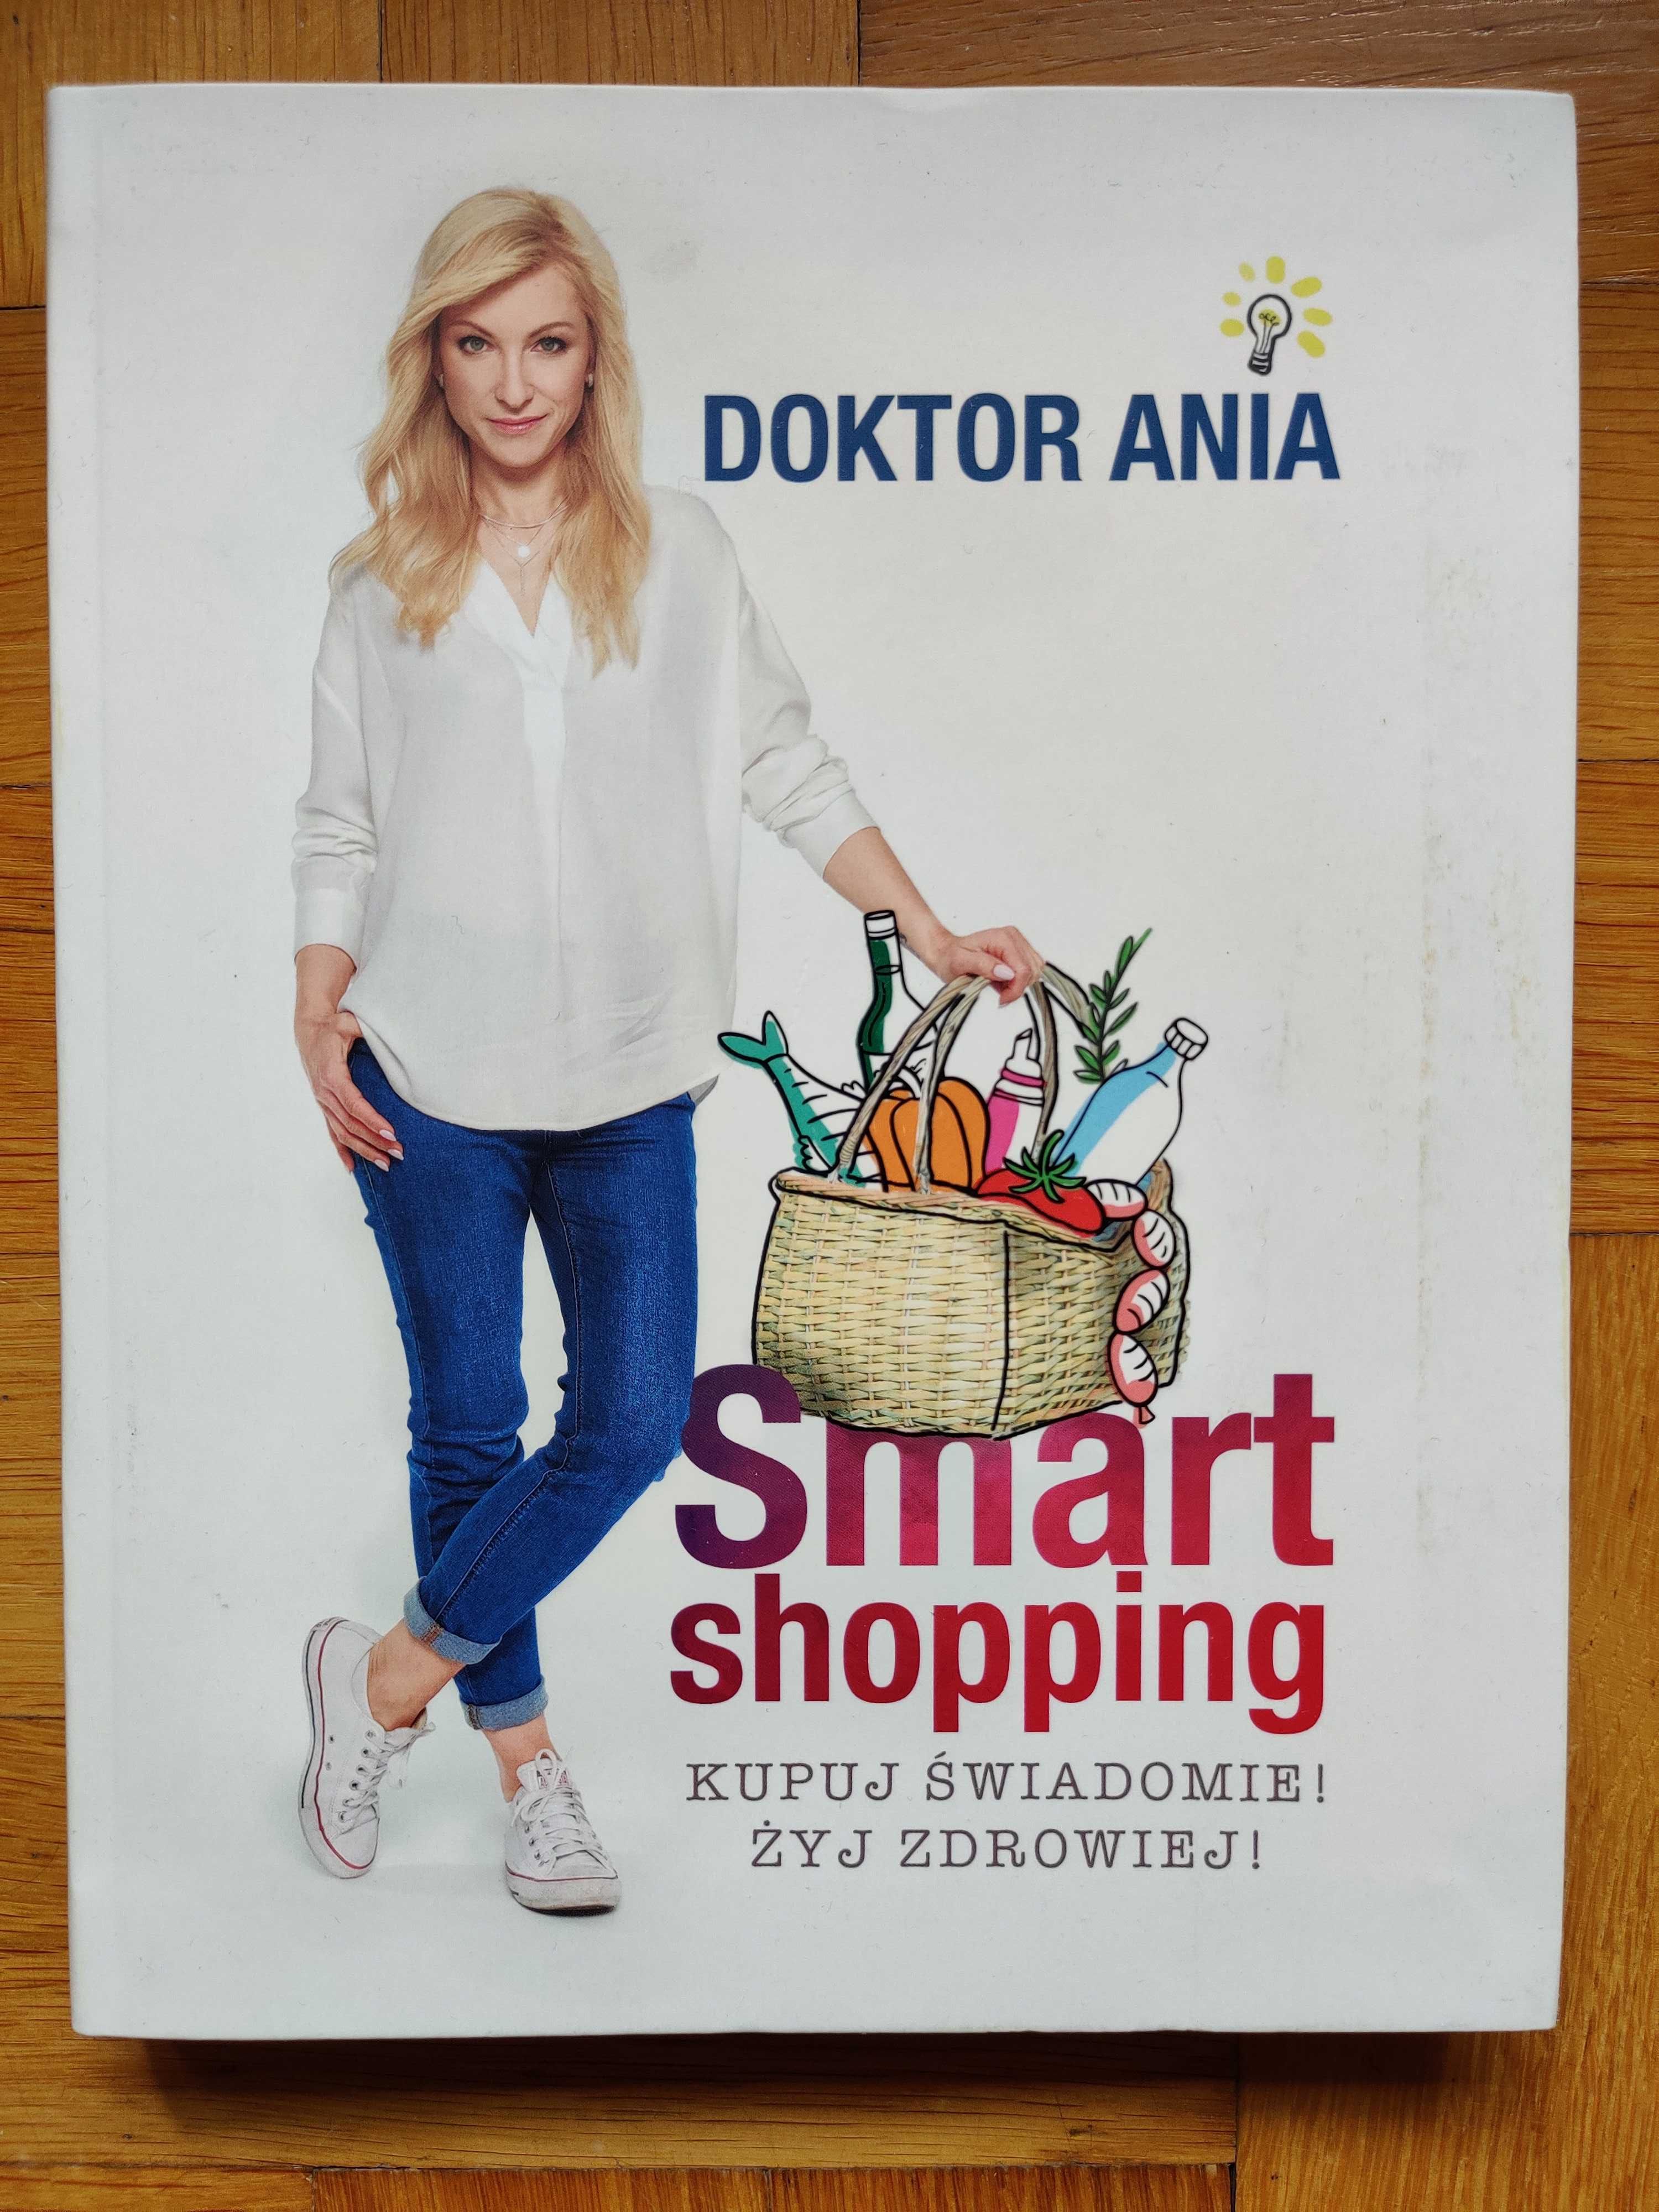 Doktor Ania, Anna Makowska - Smart shopping, kupuj świadomie